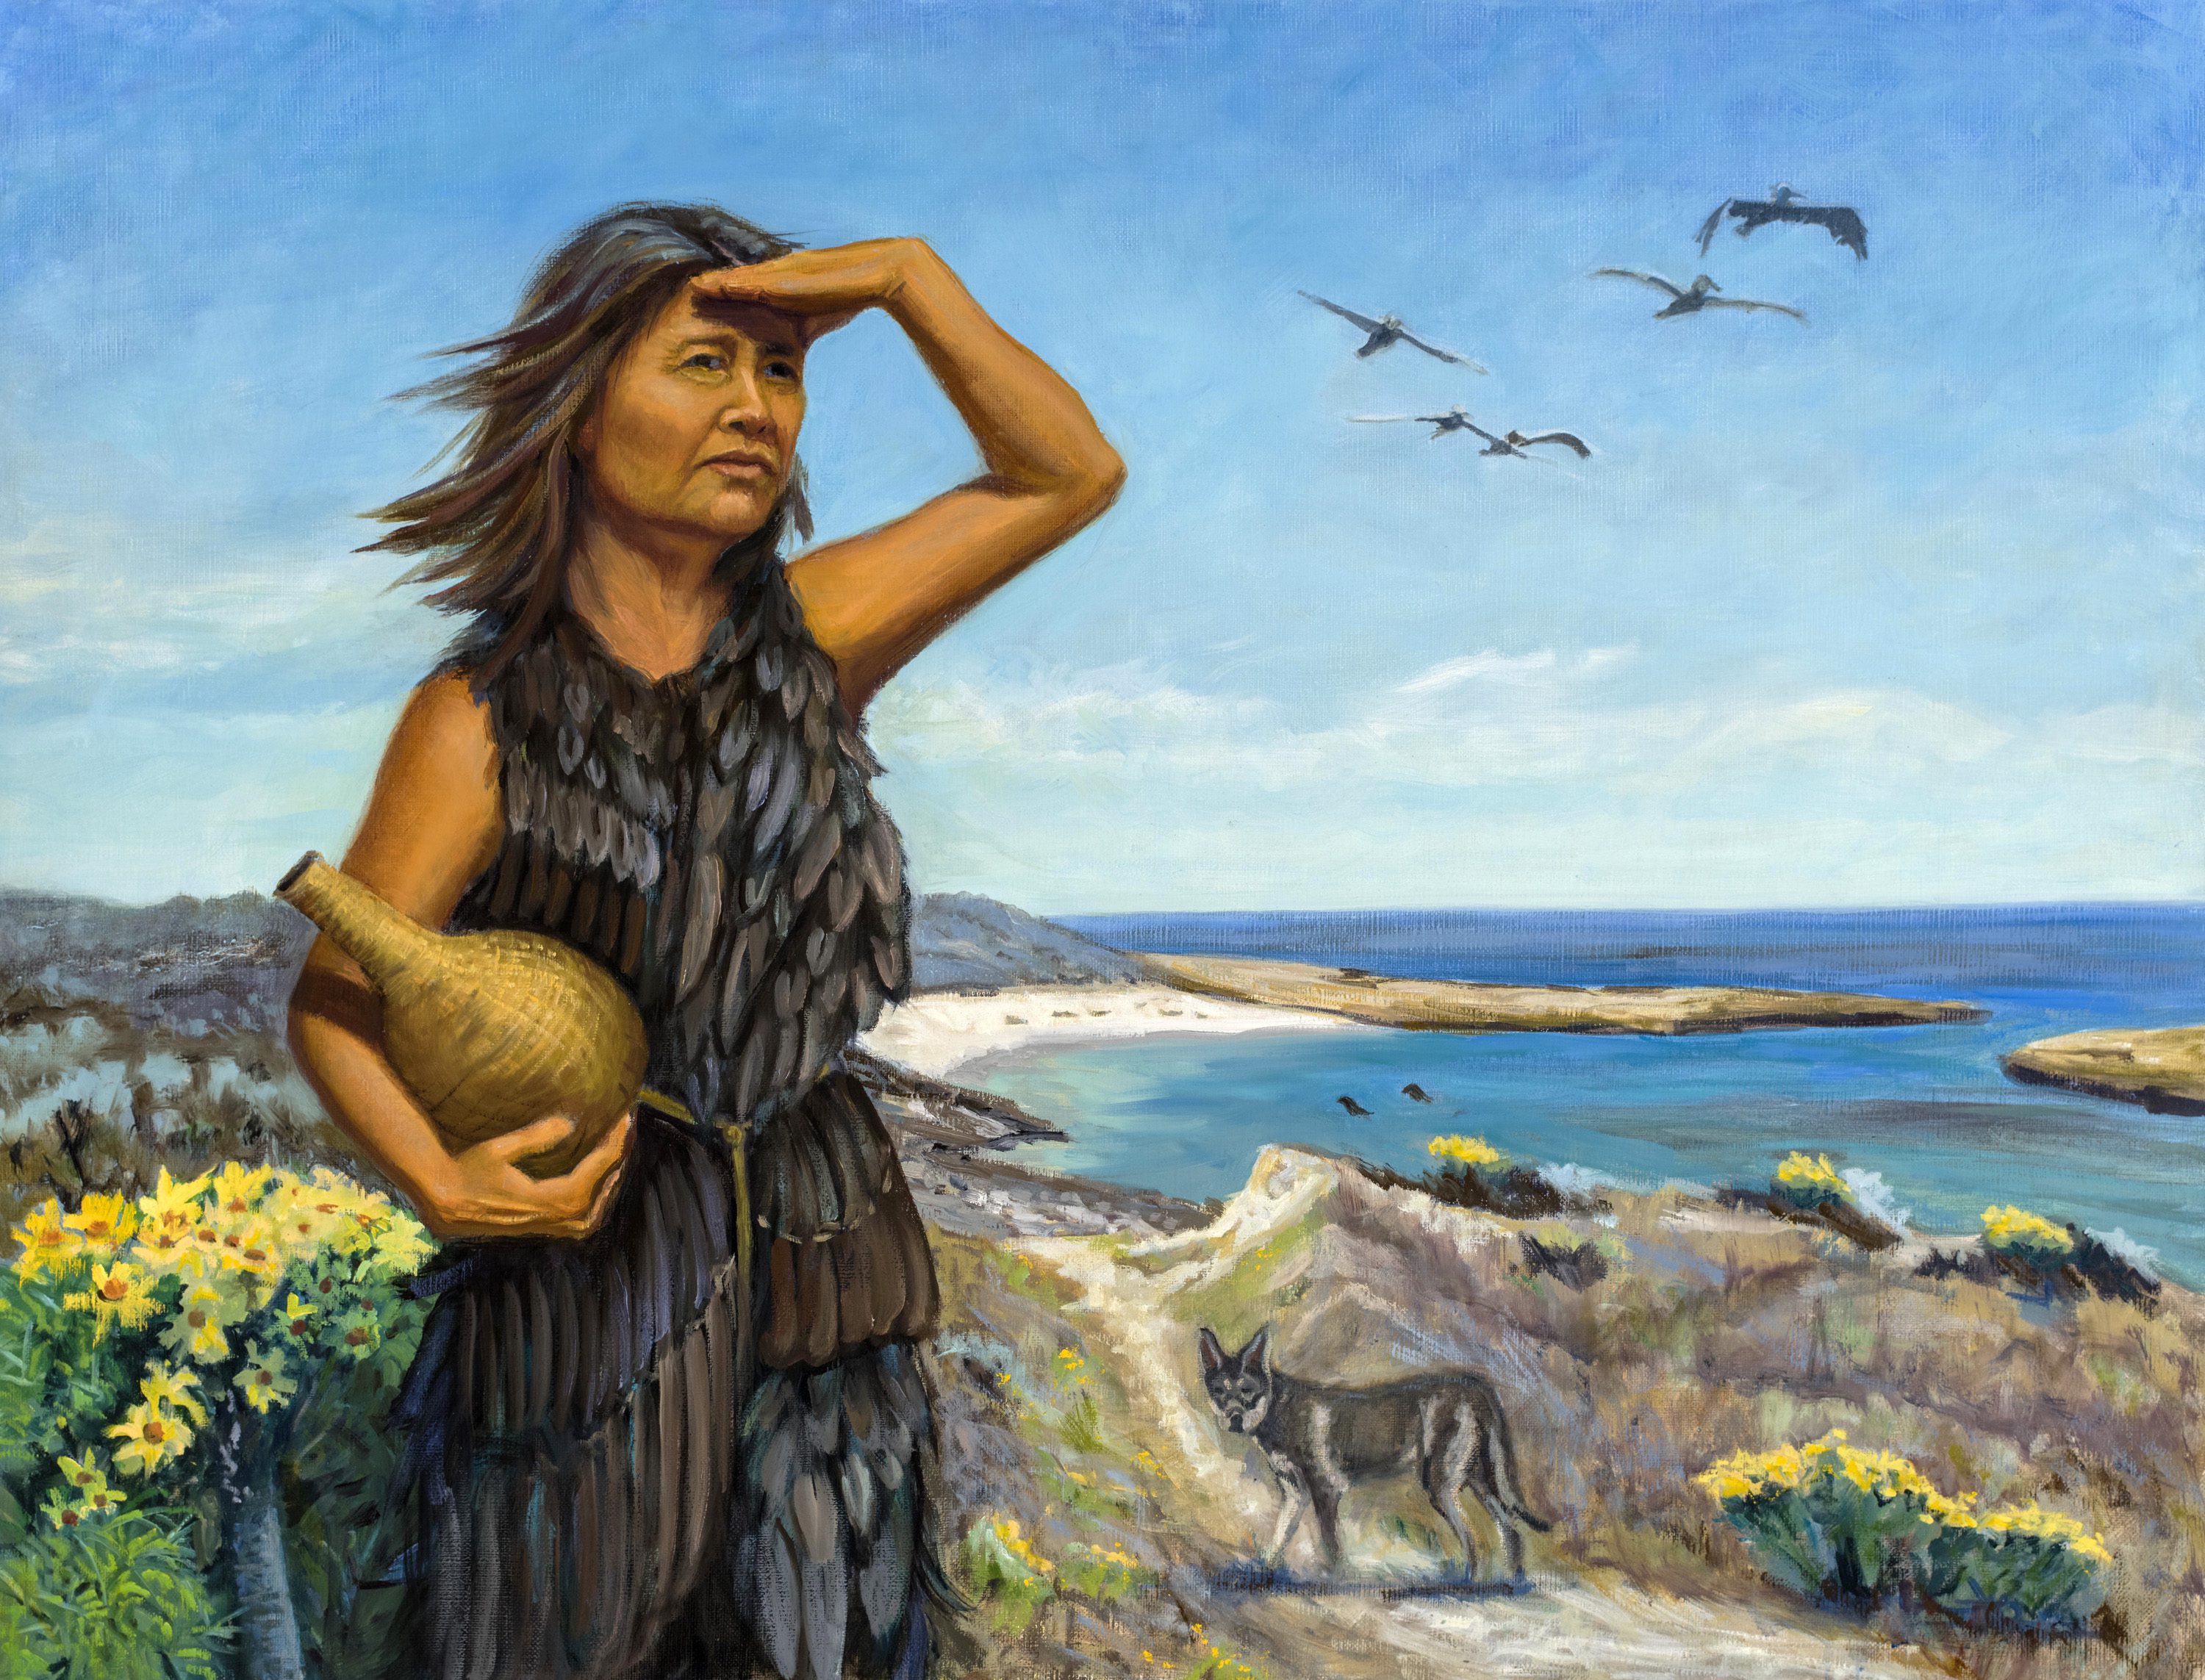 Researchers to discuss ‘Lone Woman of San Nicolas Island’